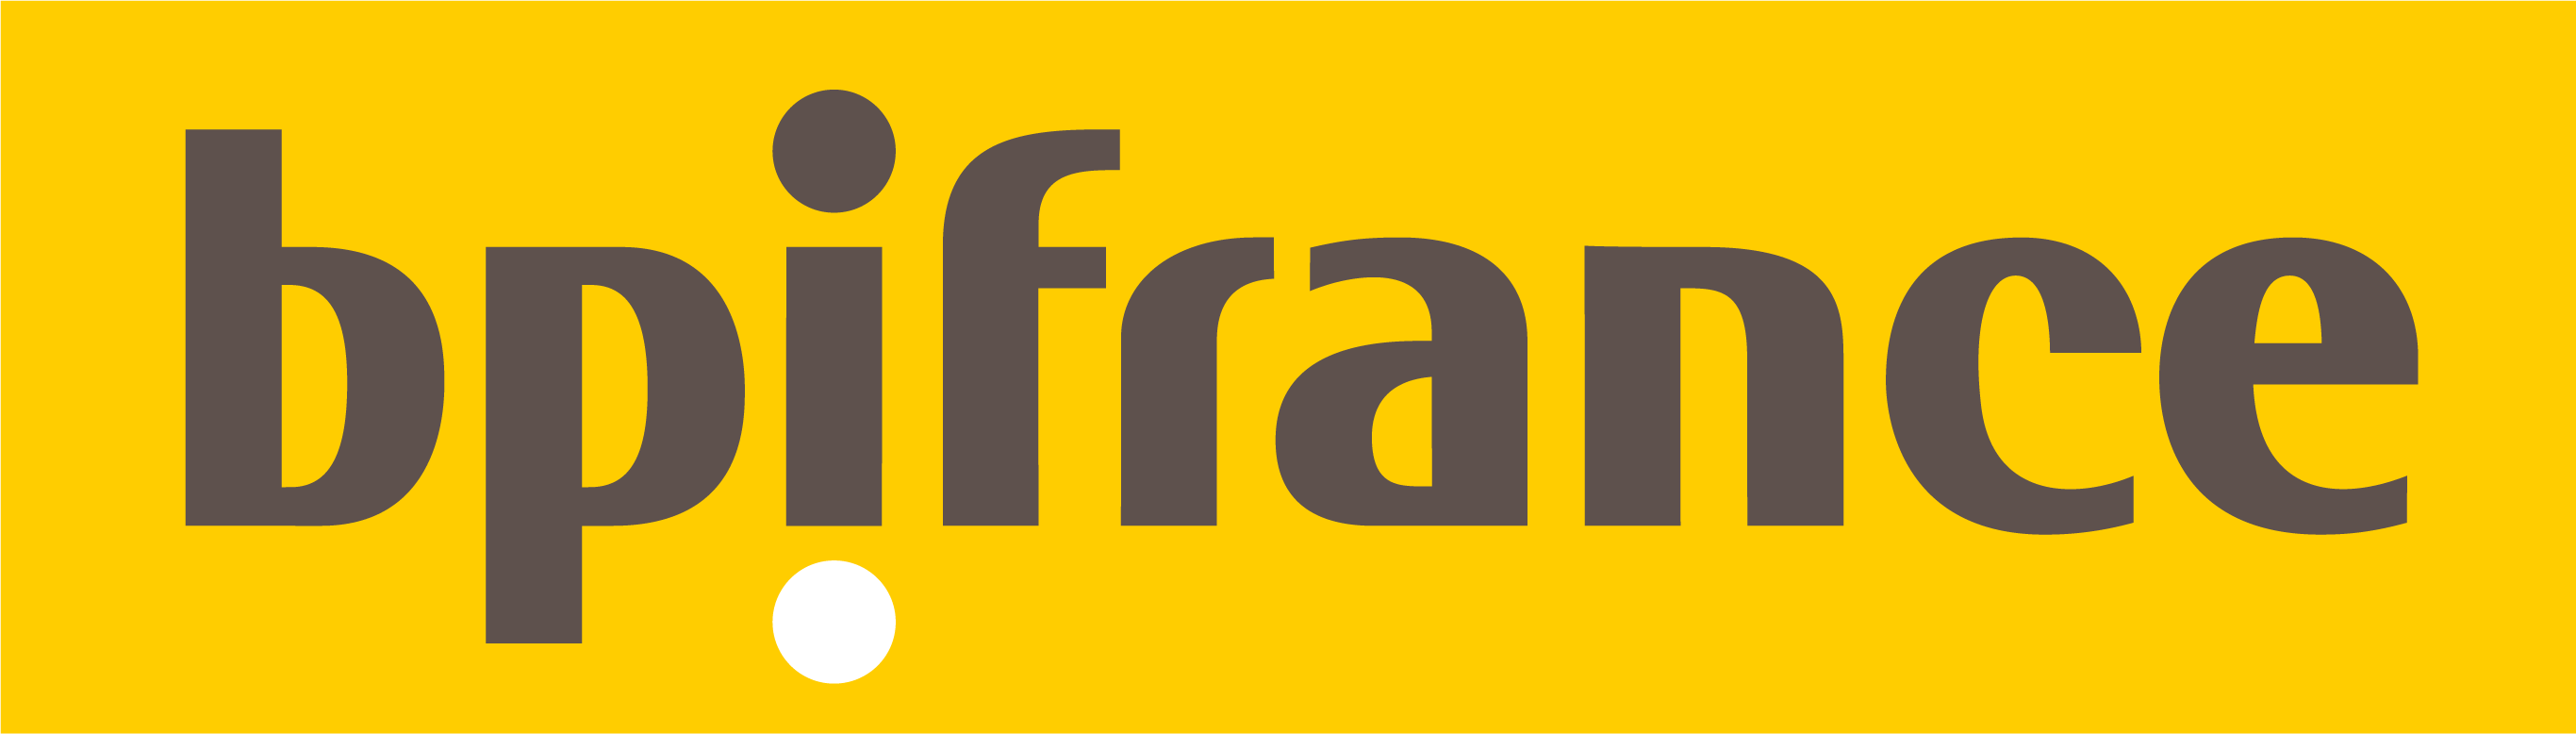 Logo Bpifrance_Partenaire_sans baseline_web